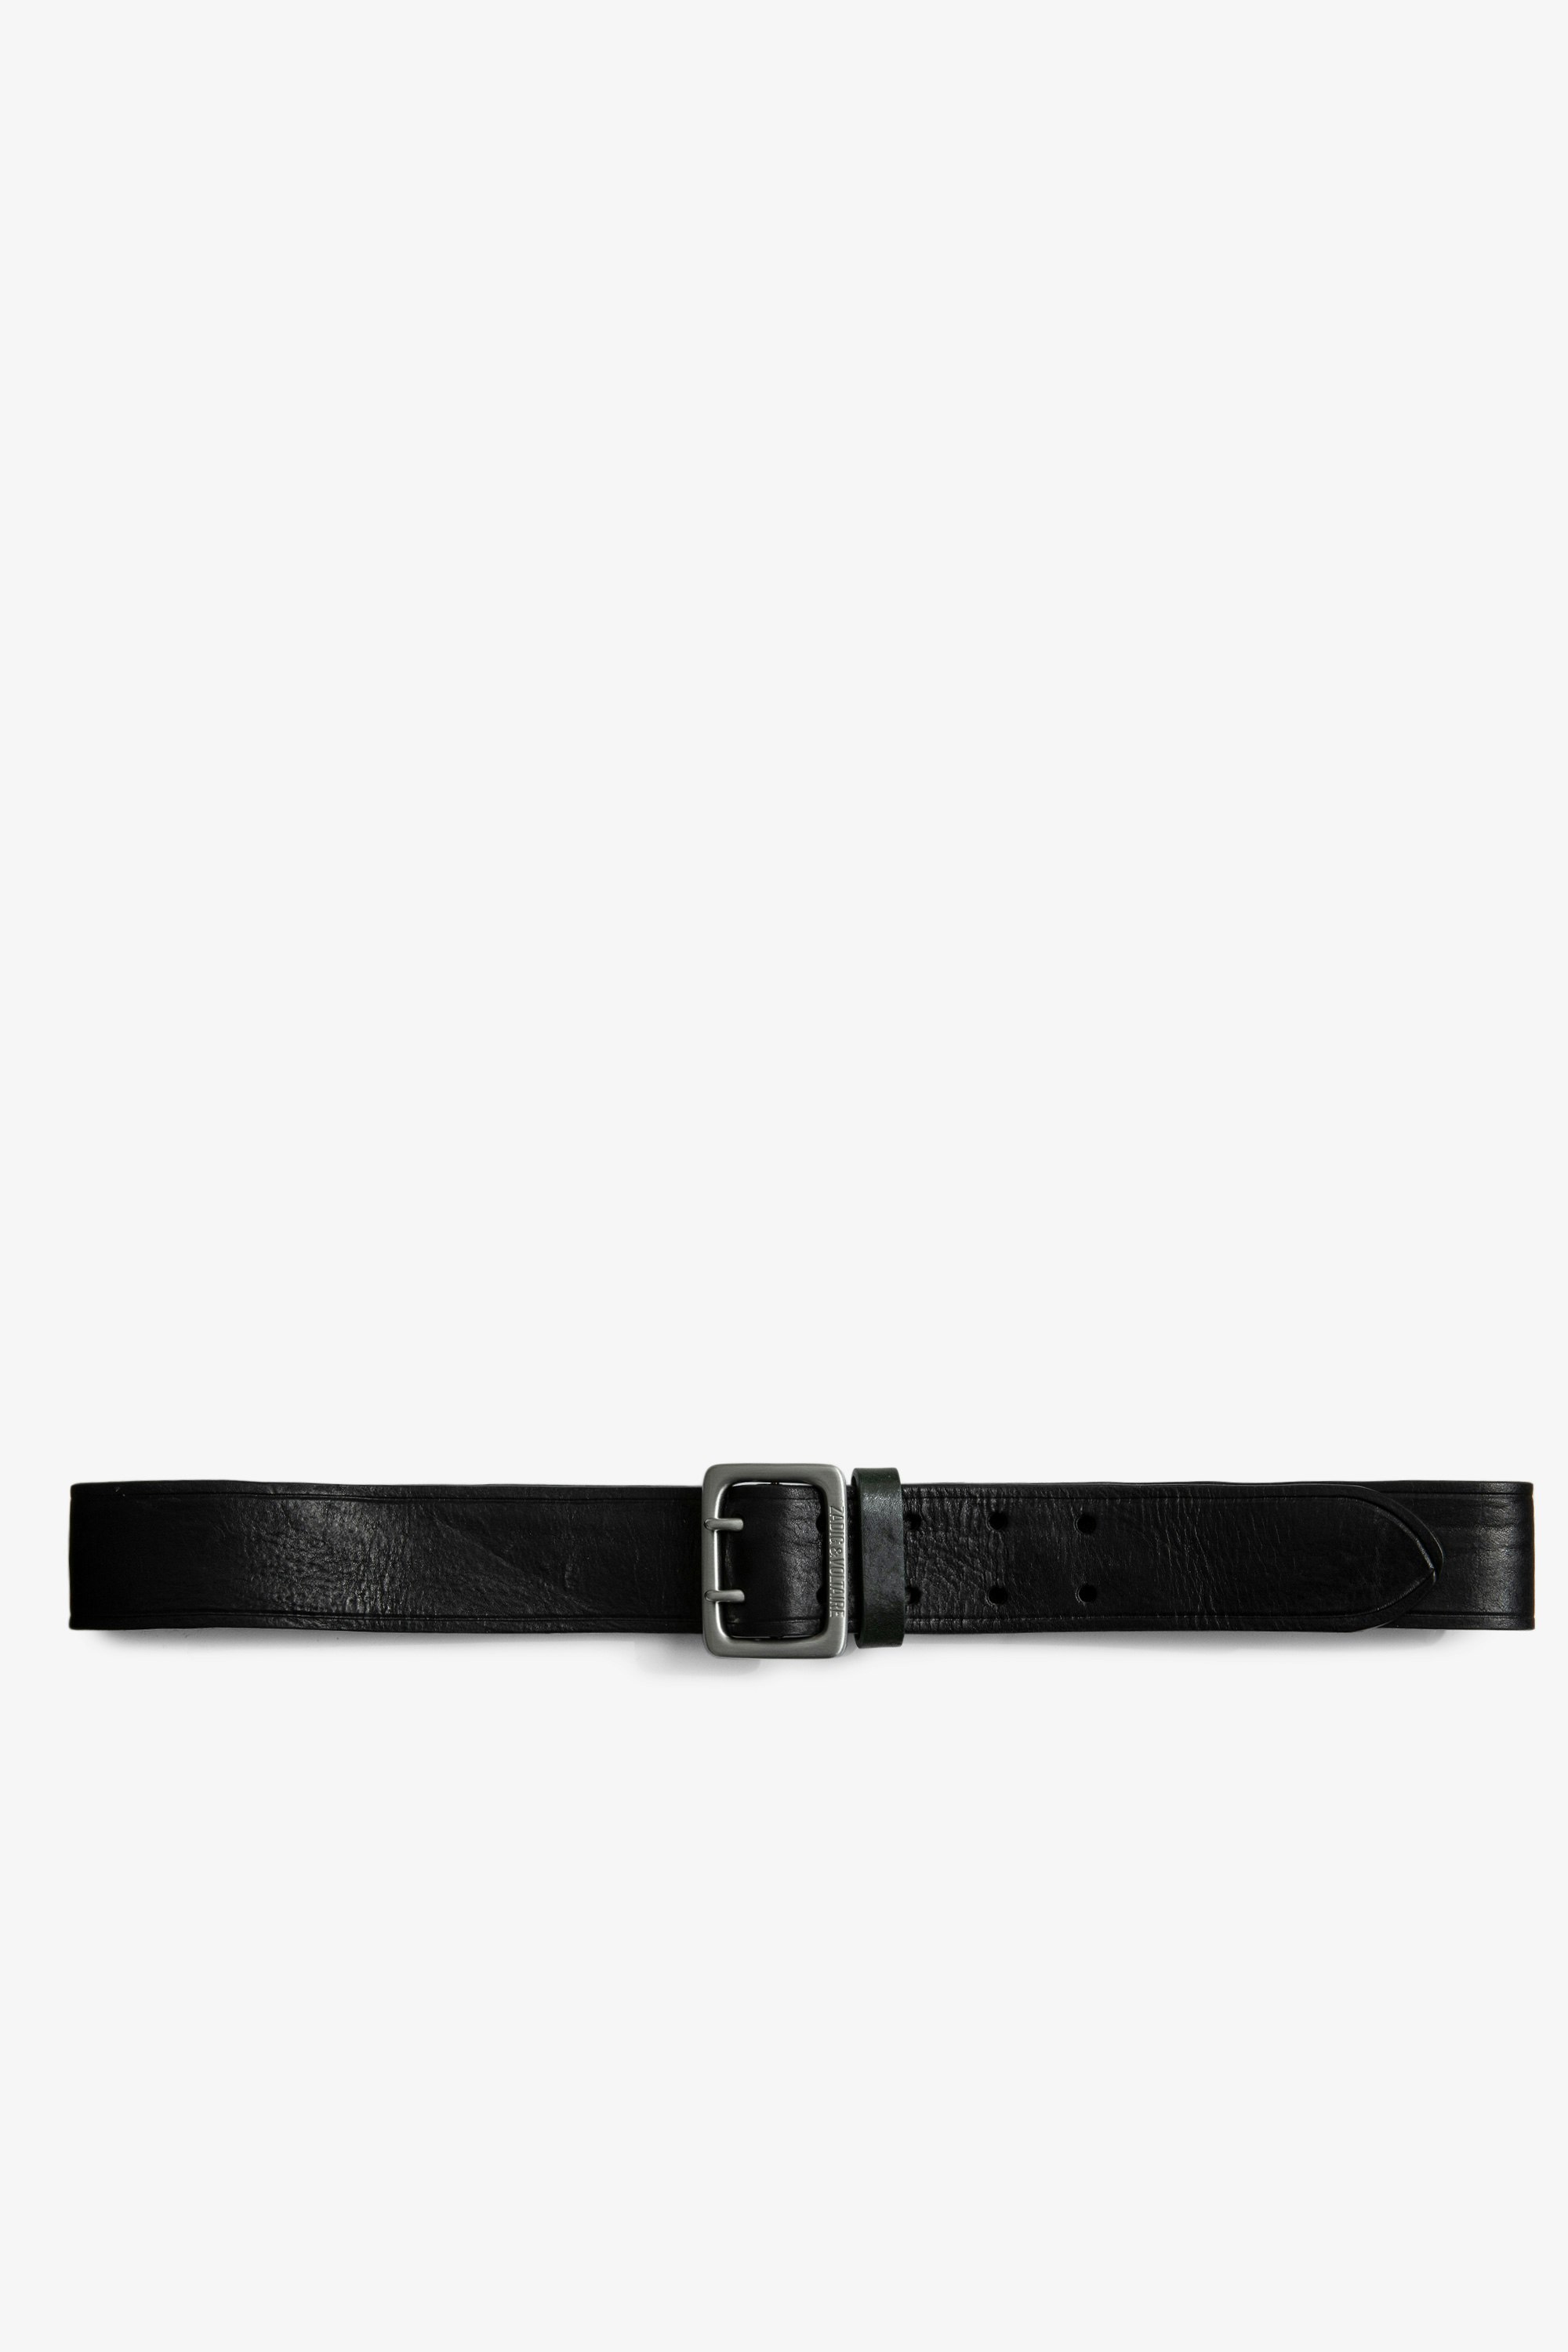 Buckley Belt Leather Men's black leather belt with silver buckle